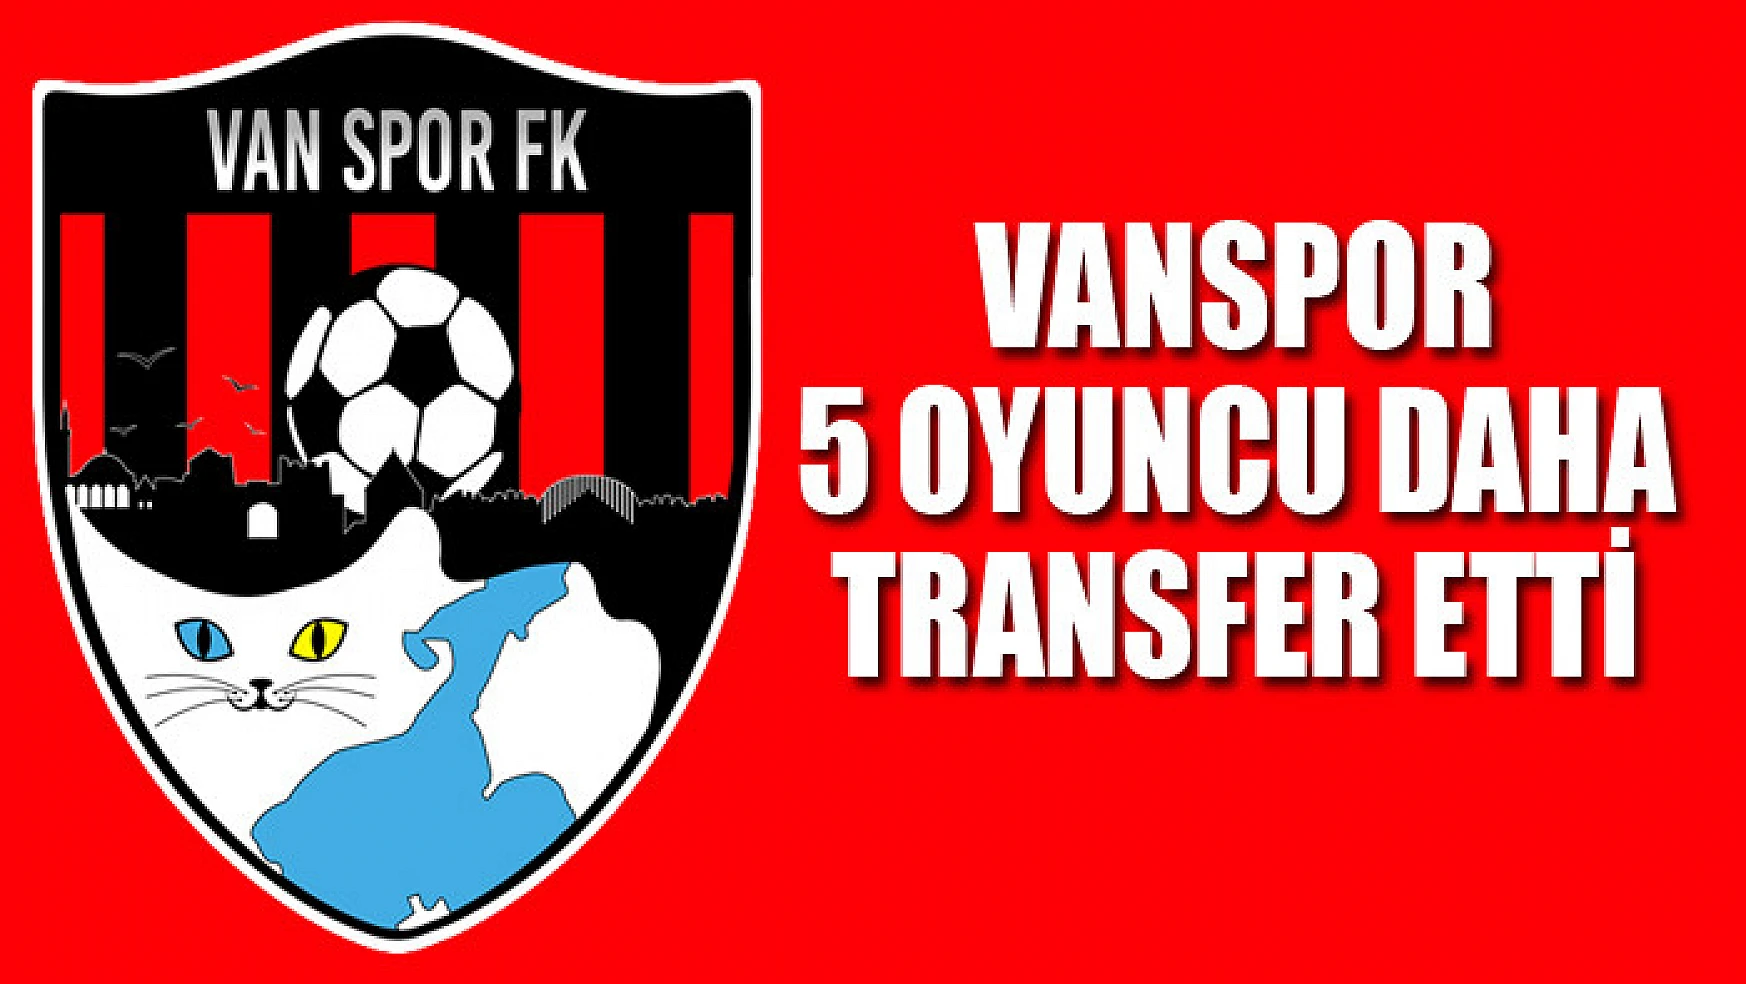 Vanspor 5 oyuncu daha transfer etti